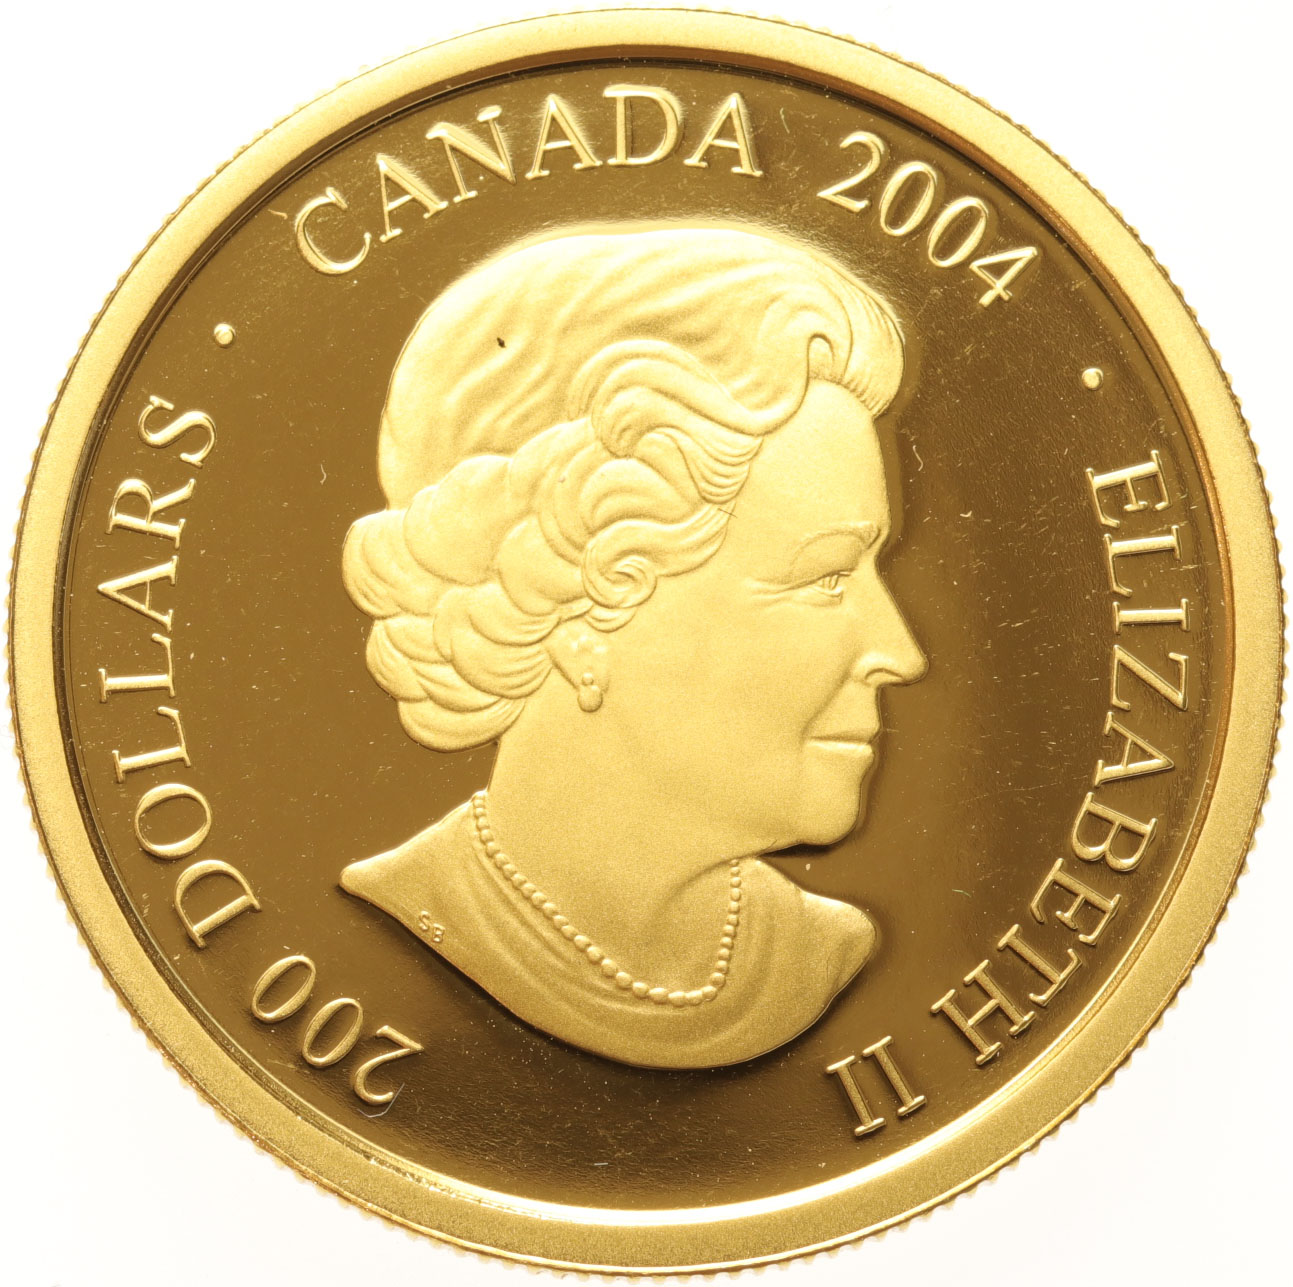 Canada 200 dollars 2004 Pellan